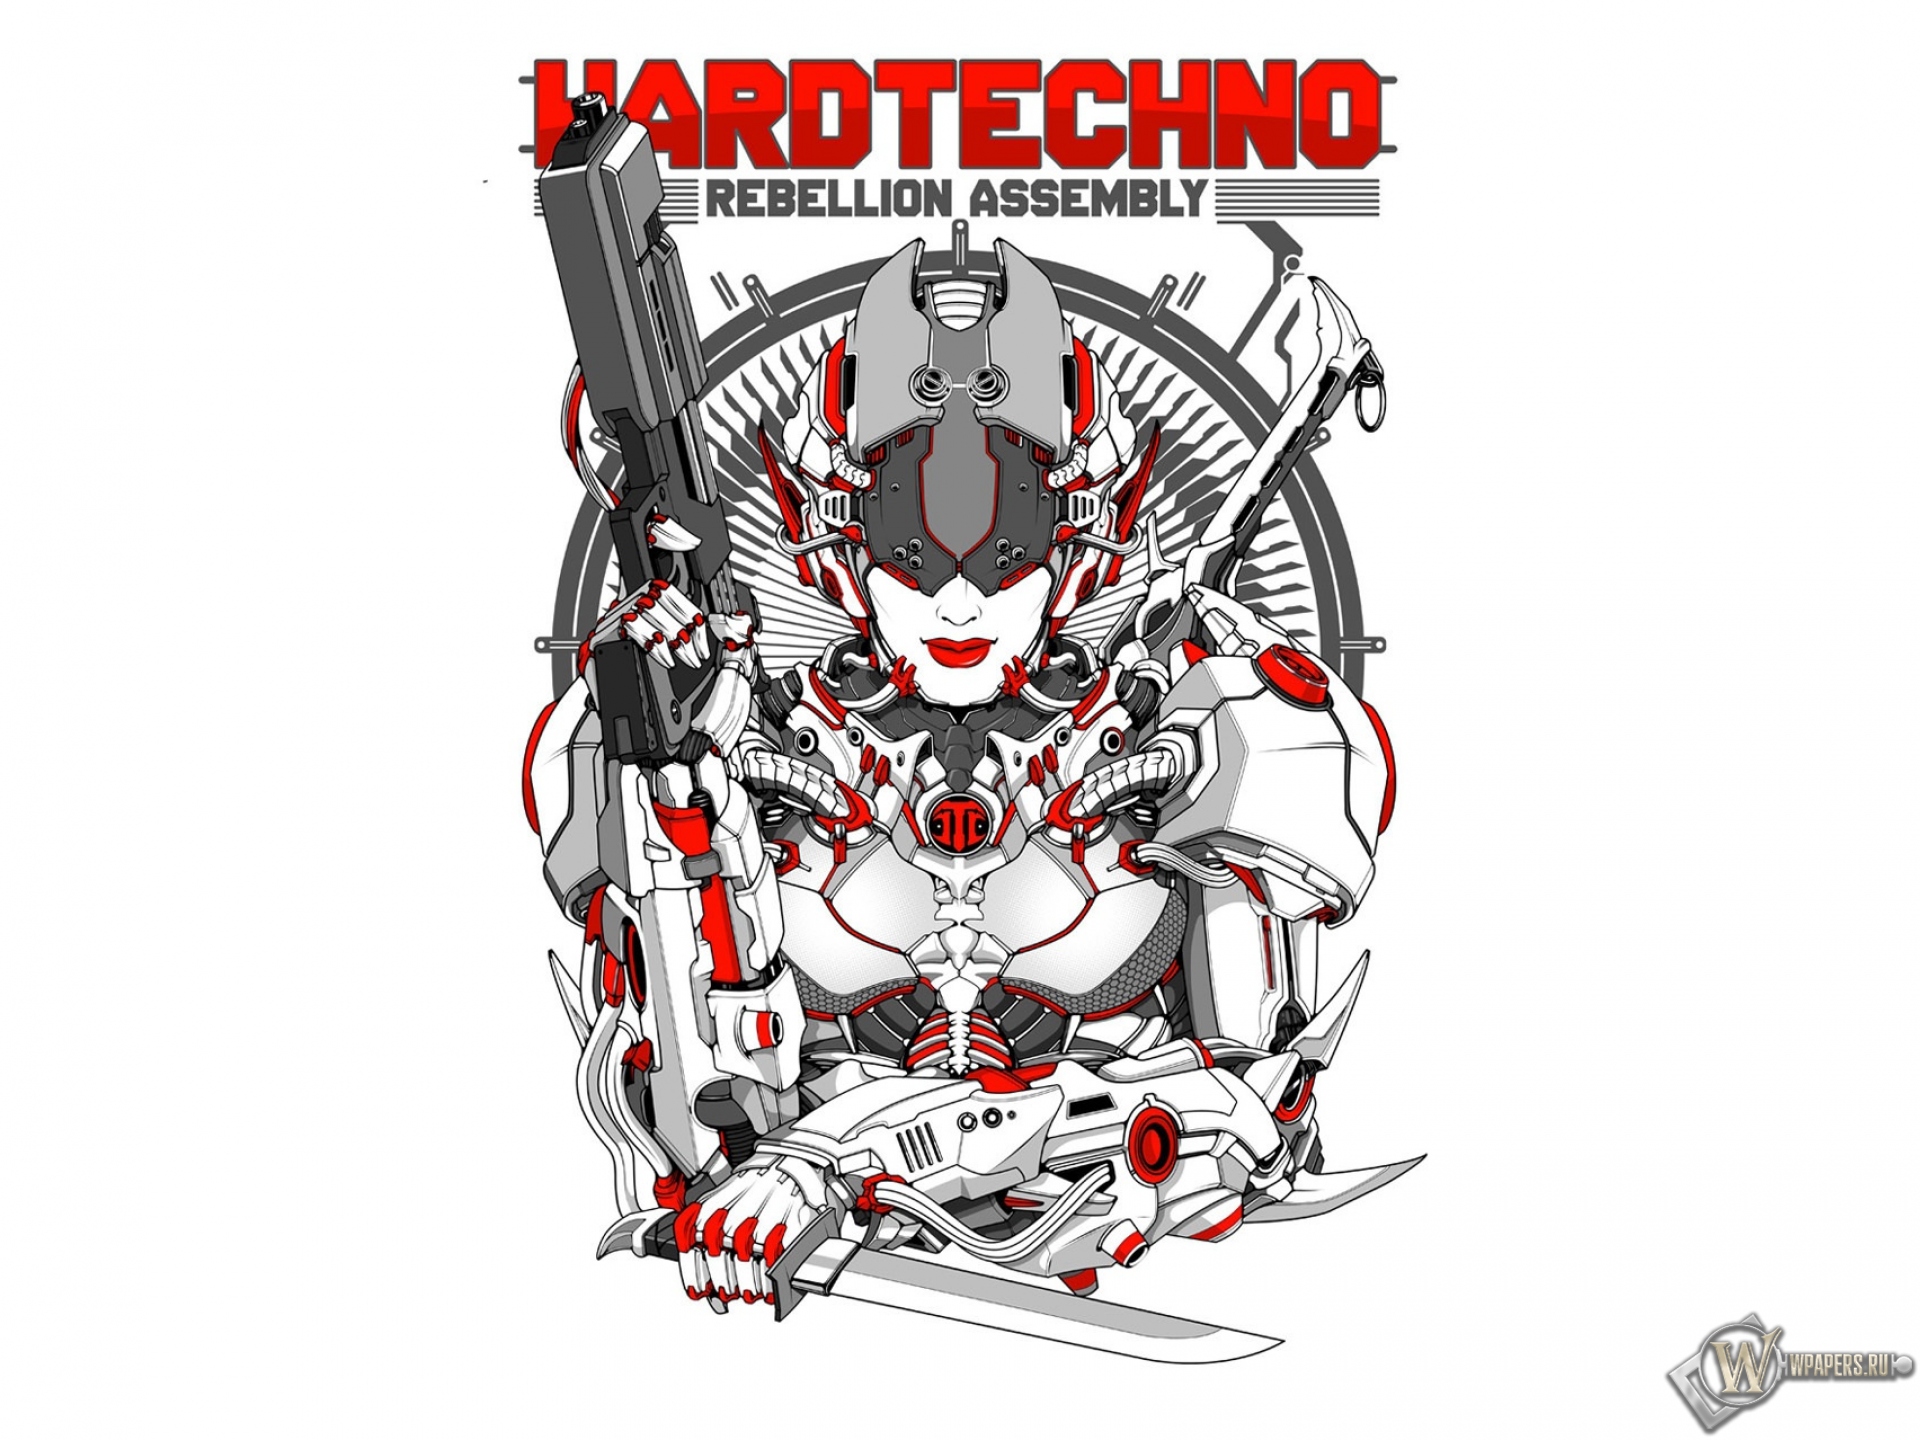 HardTechno 1920x1440